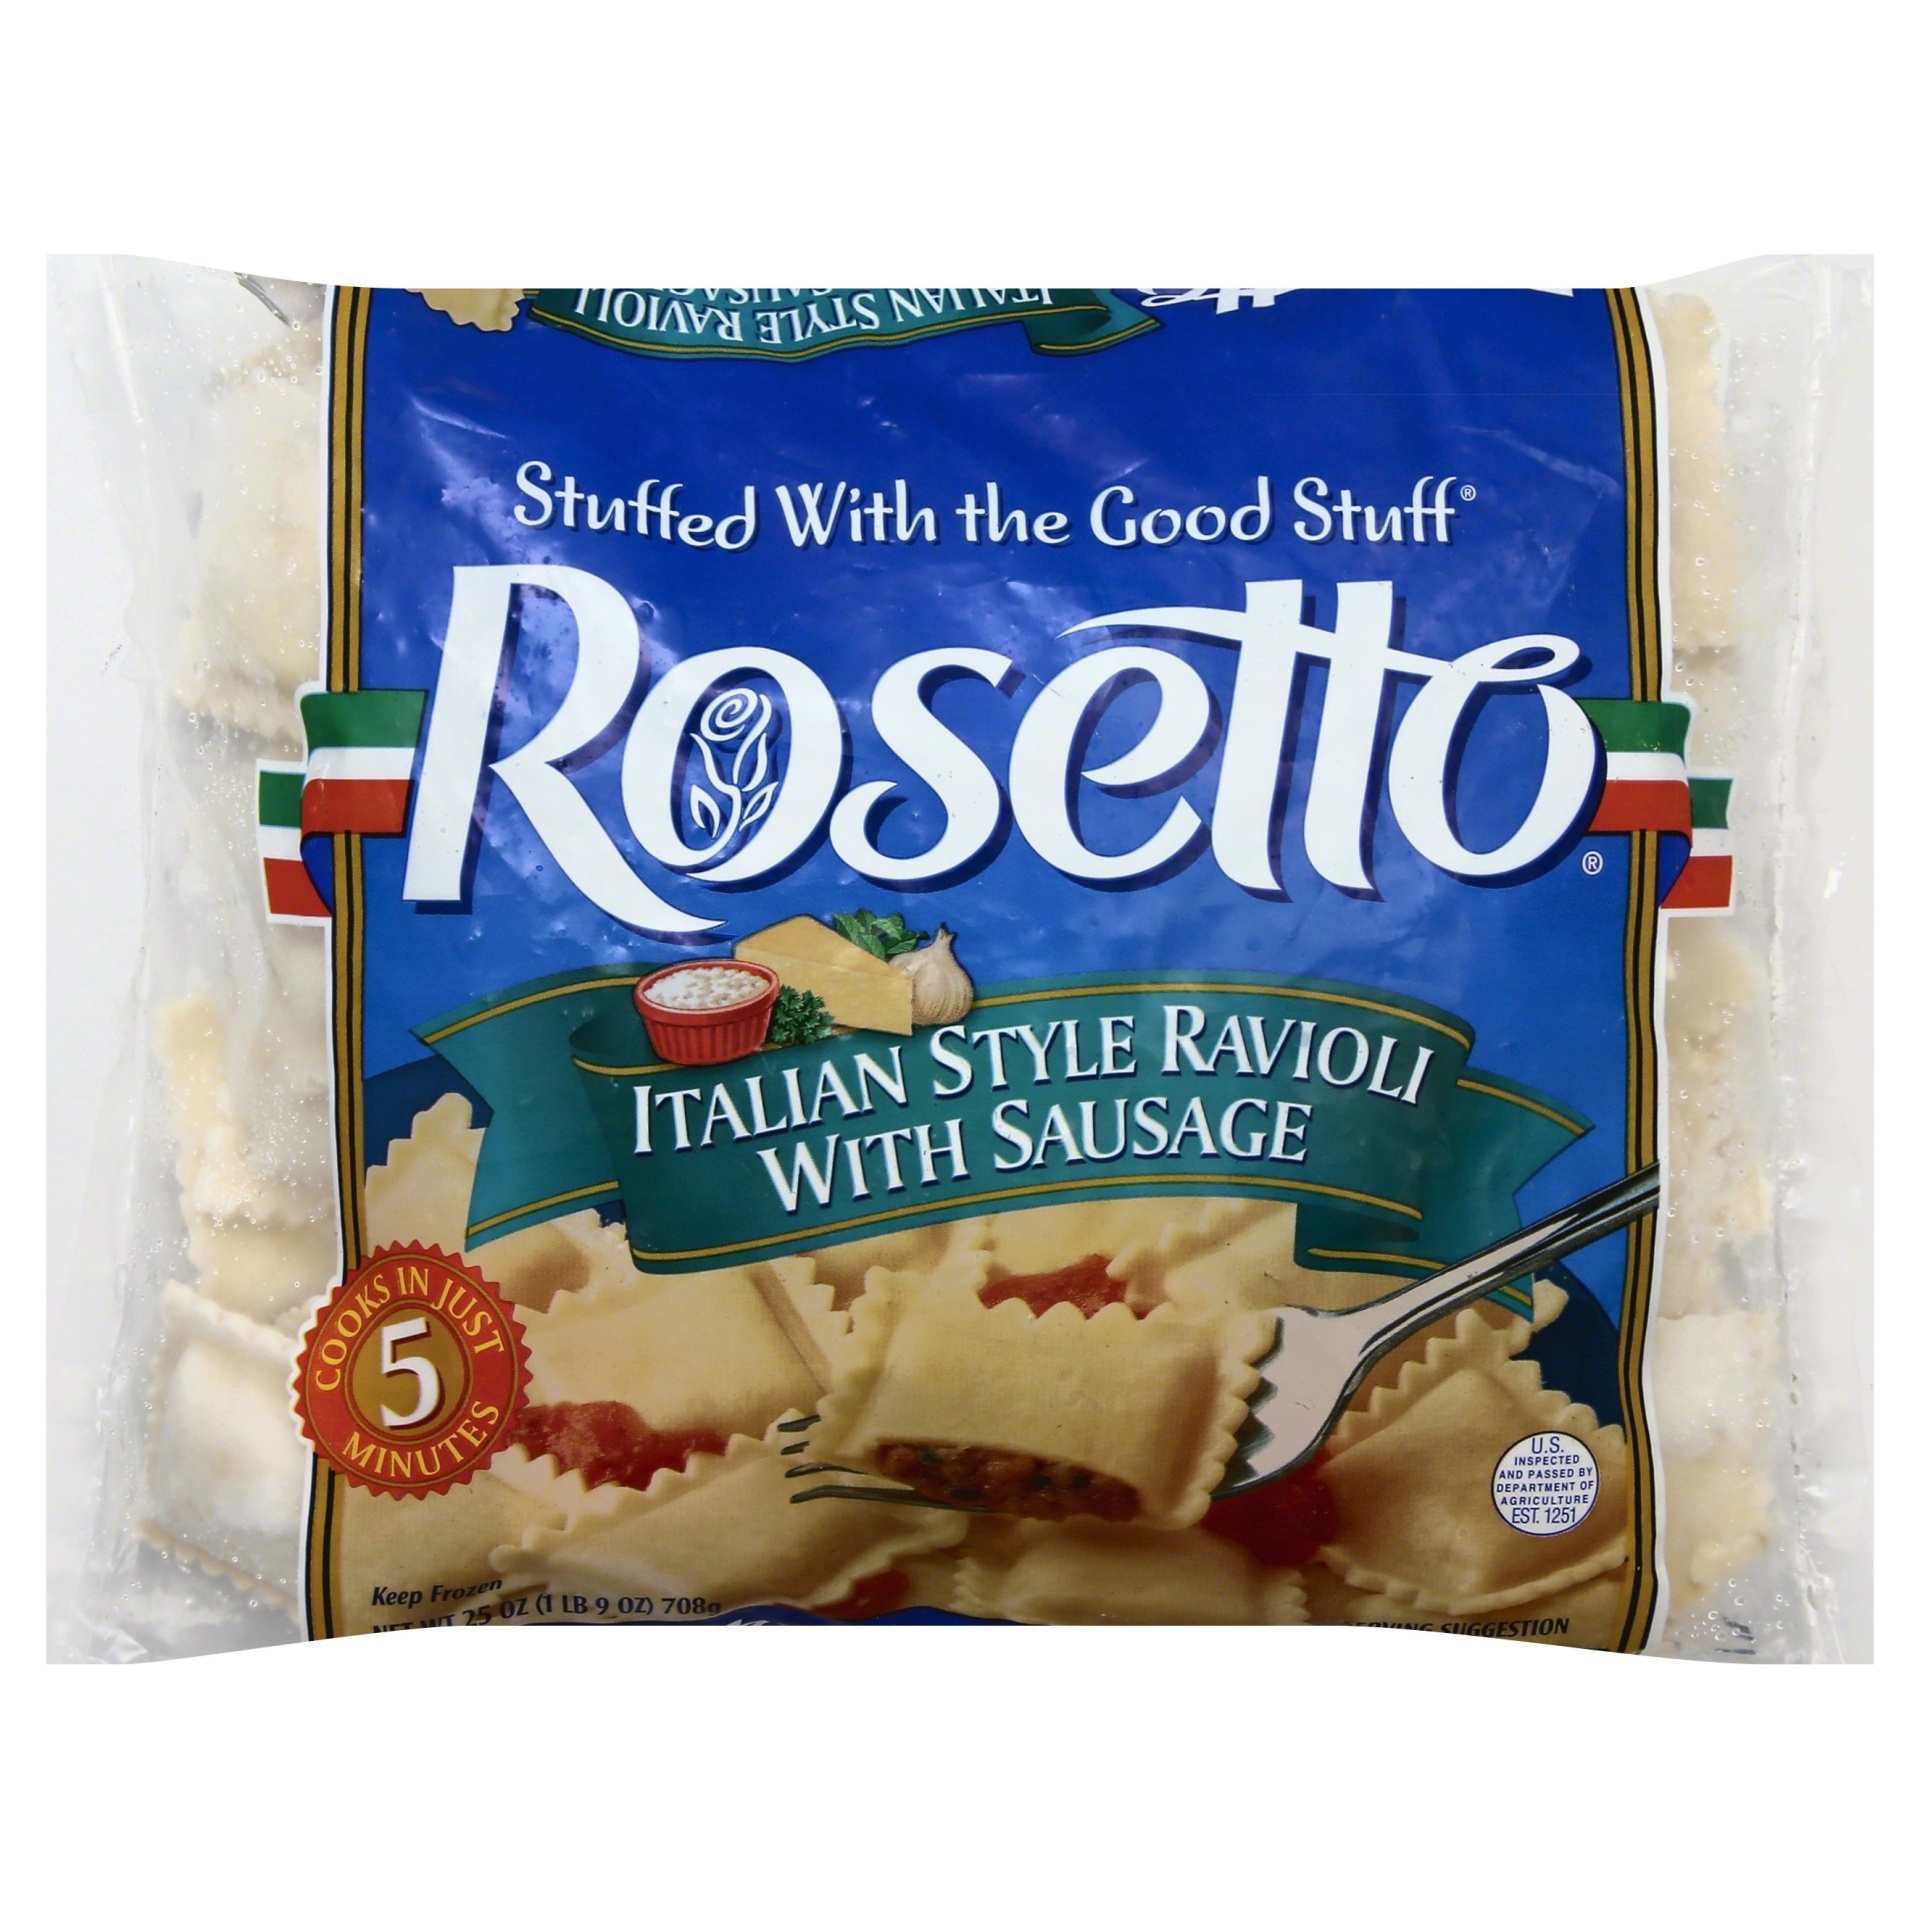 slide 1 of 2, Rosetto Italian Style Ravioli with Sausage, 25 oz